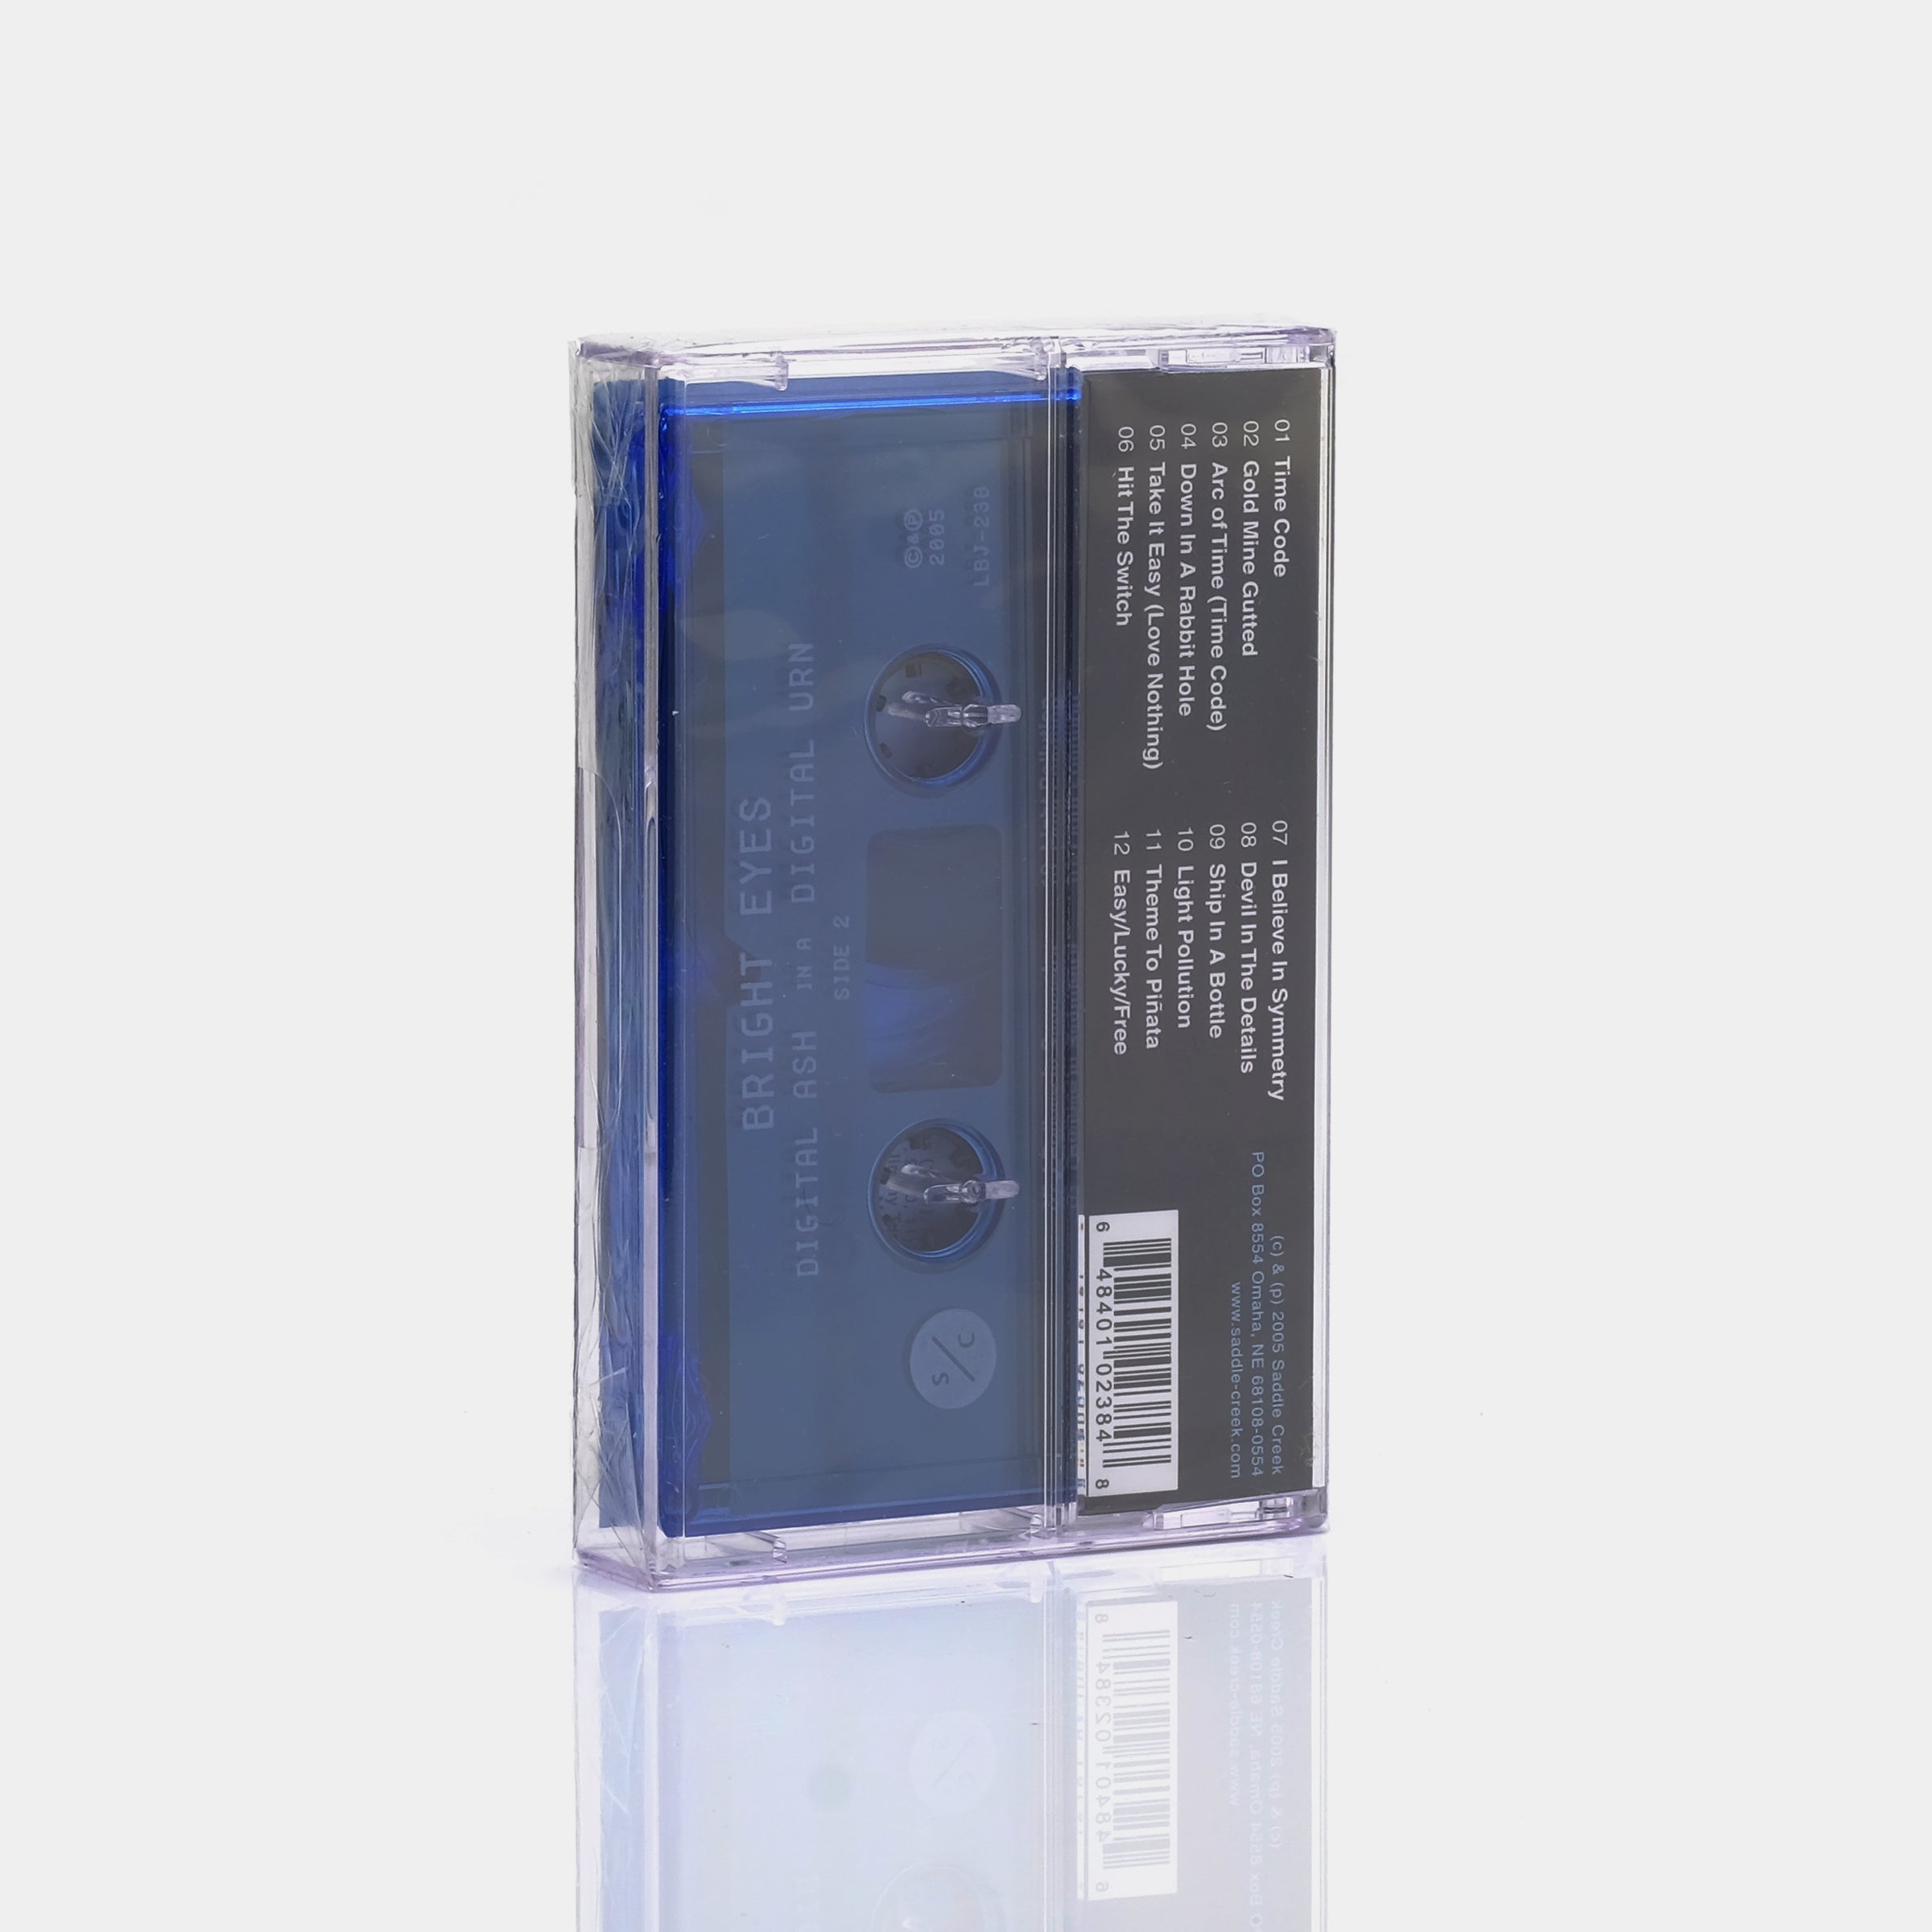 Bright Eyes - Digital Ash In A Digital Urn Cassette Tape